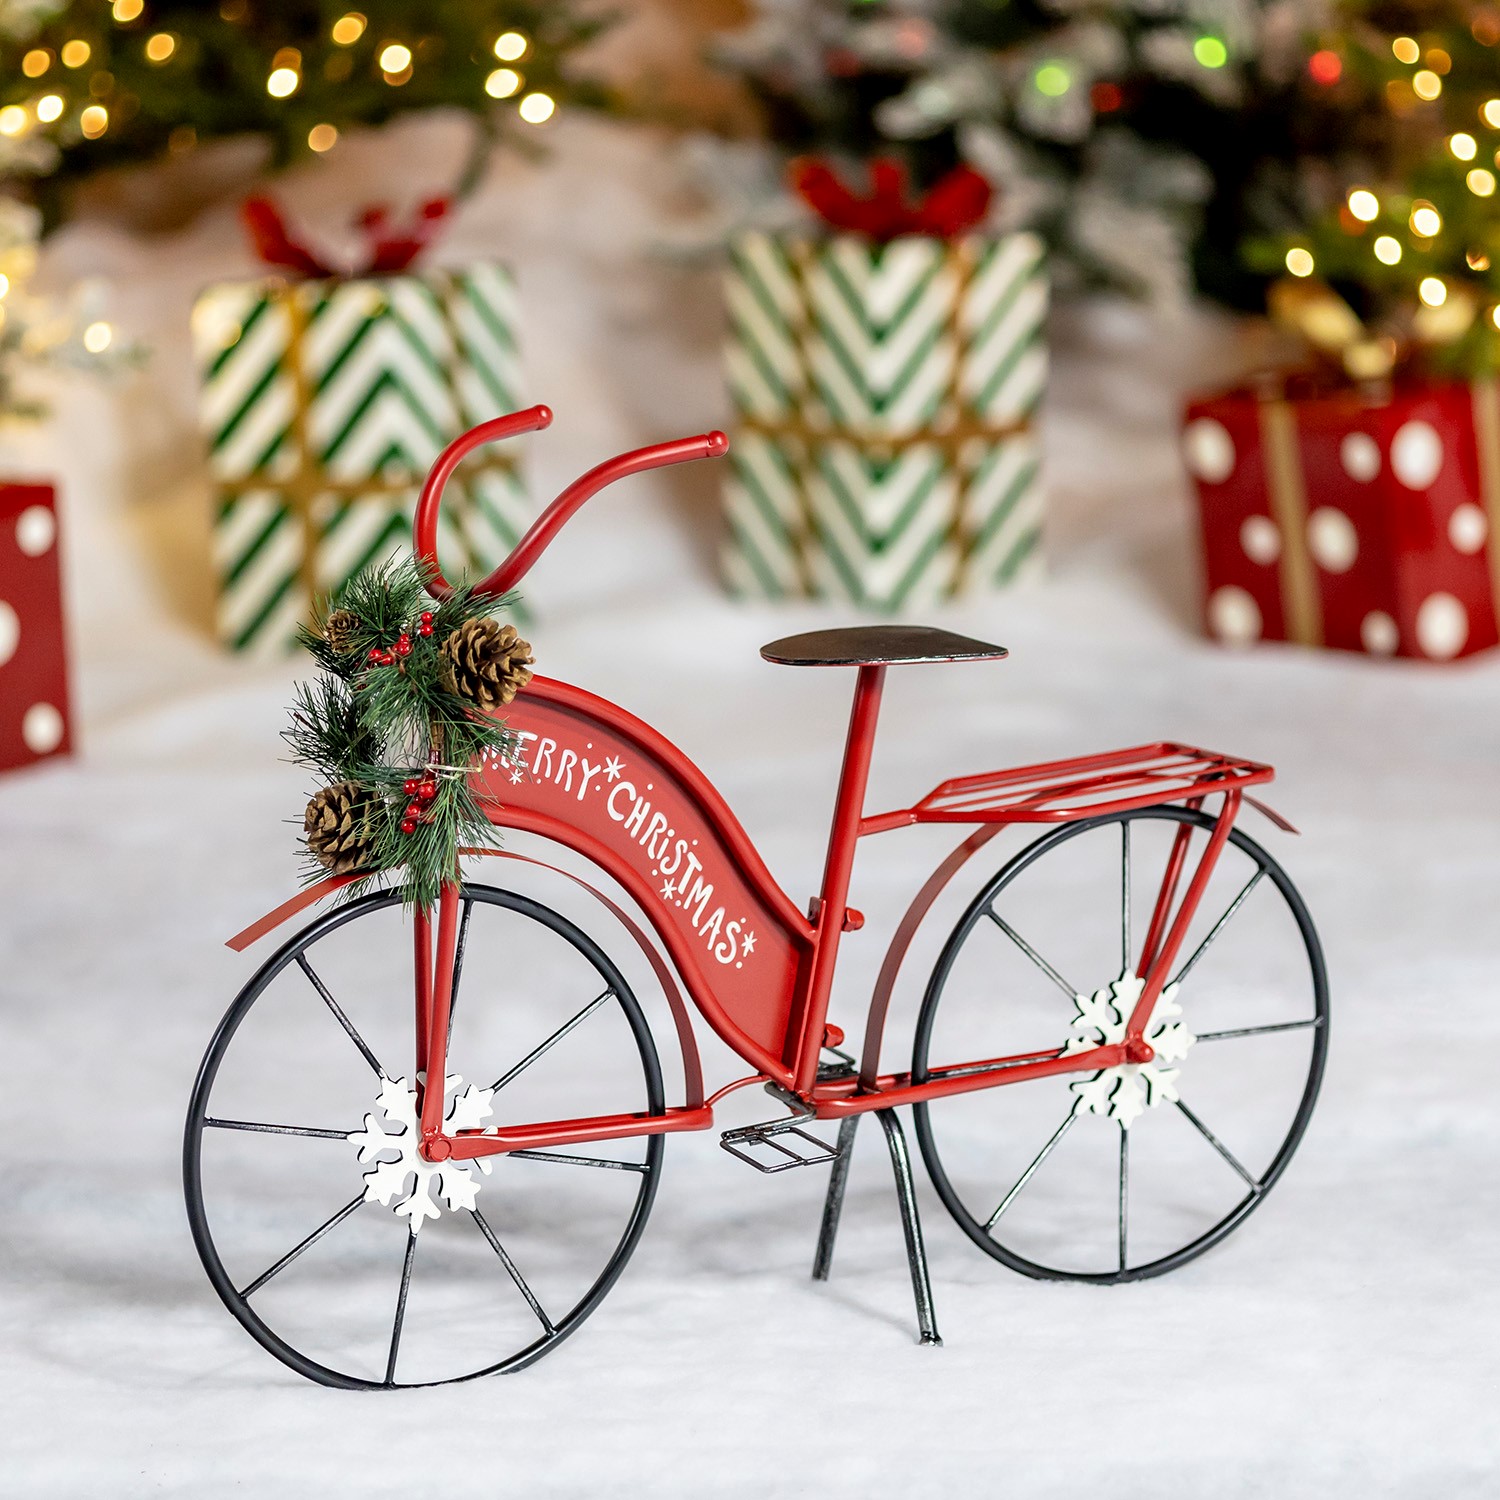 Zaer Ltd International Small Iron "Merry Christmas" Bicycle Decor with Light-Up Wreath ZR181747